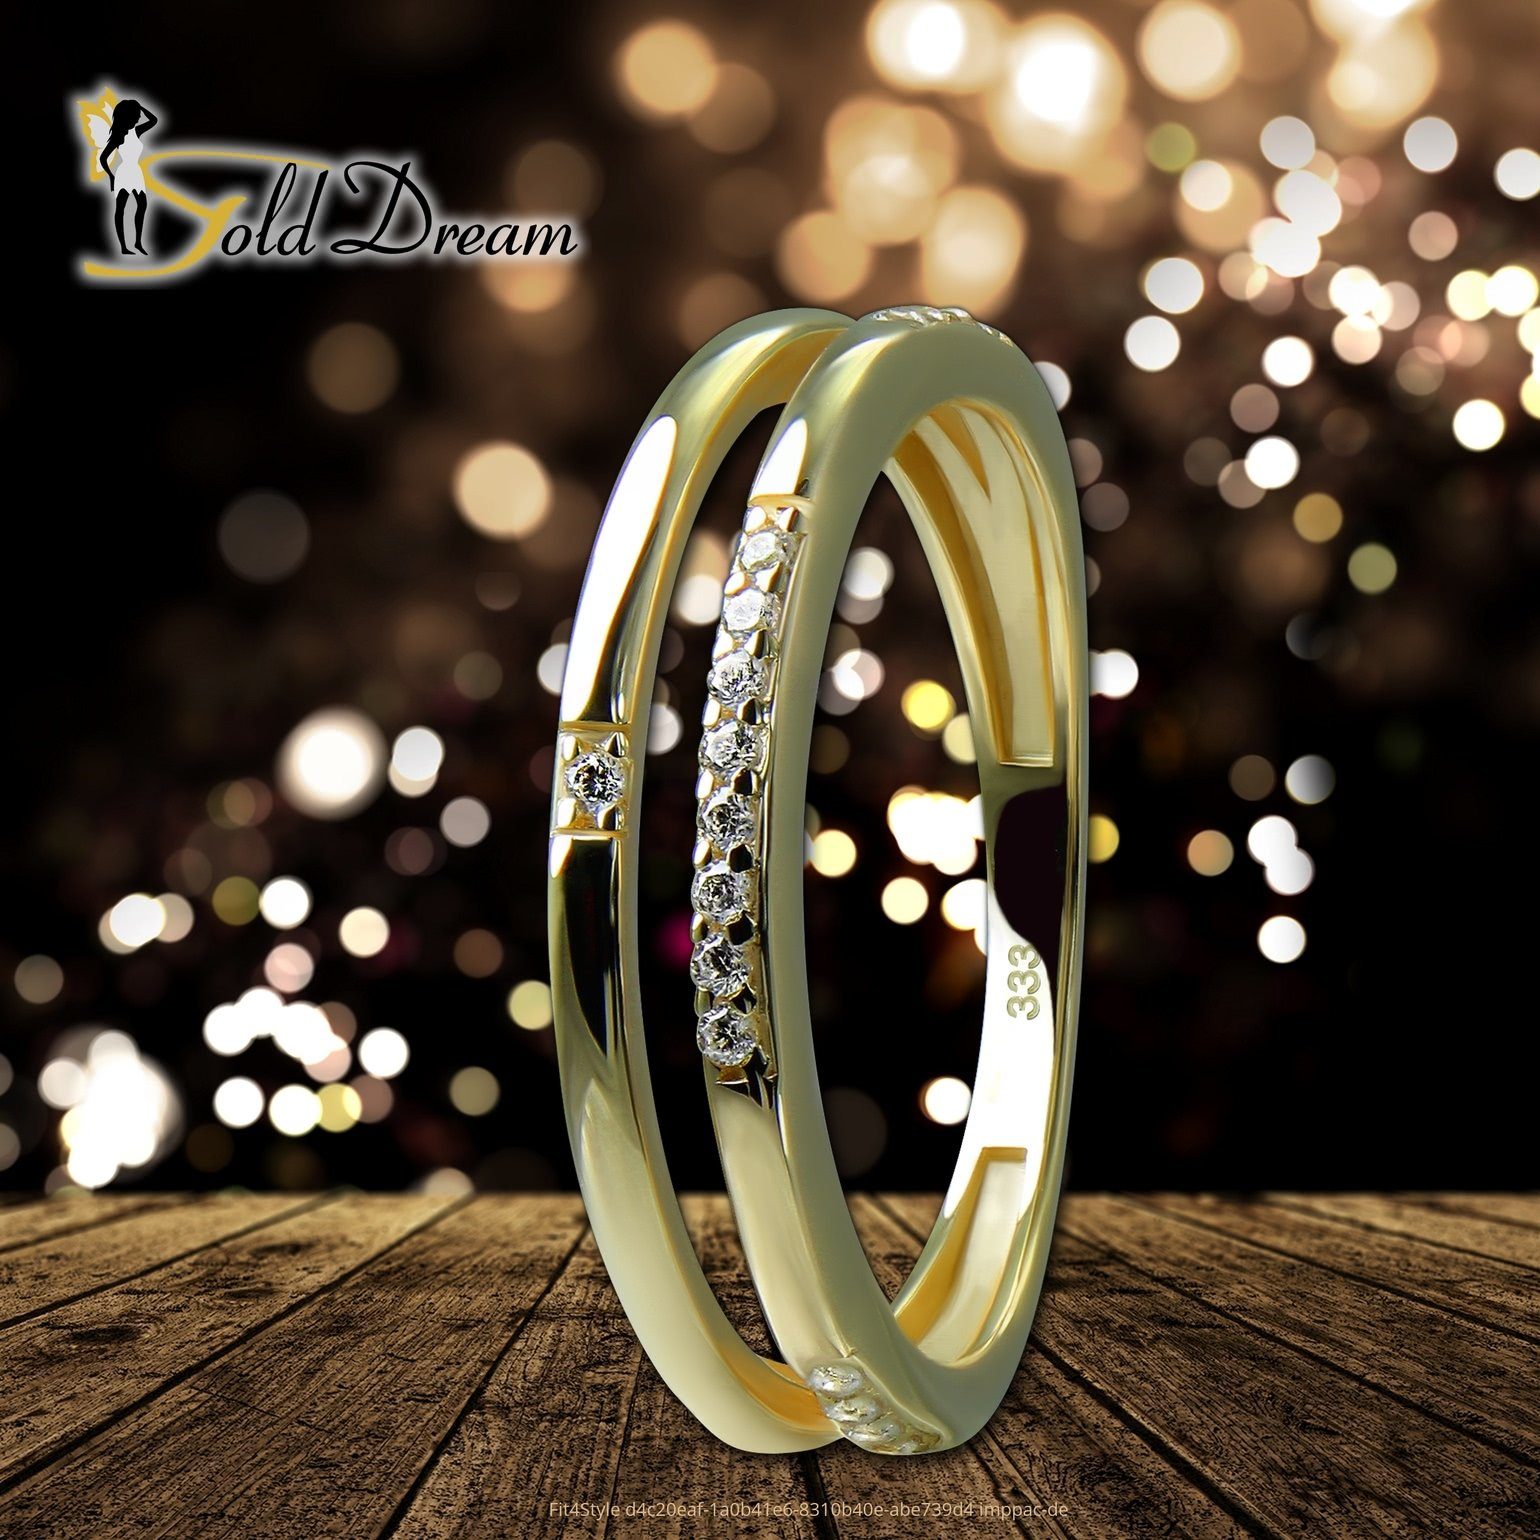 Double (Fingerring), Gelbgold Gr.56 GoldDream Gold Ring Ring 333 - Farbe: Damen GoldDream Double Karat, gold, Goldring 8 weiß